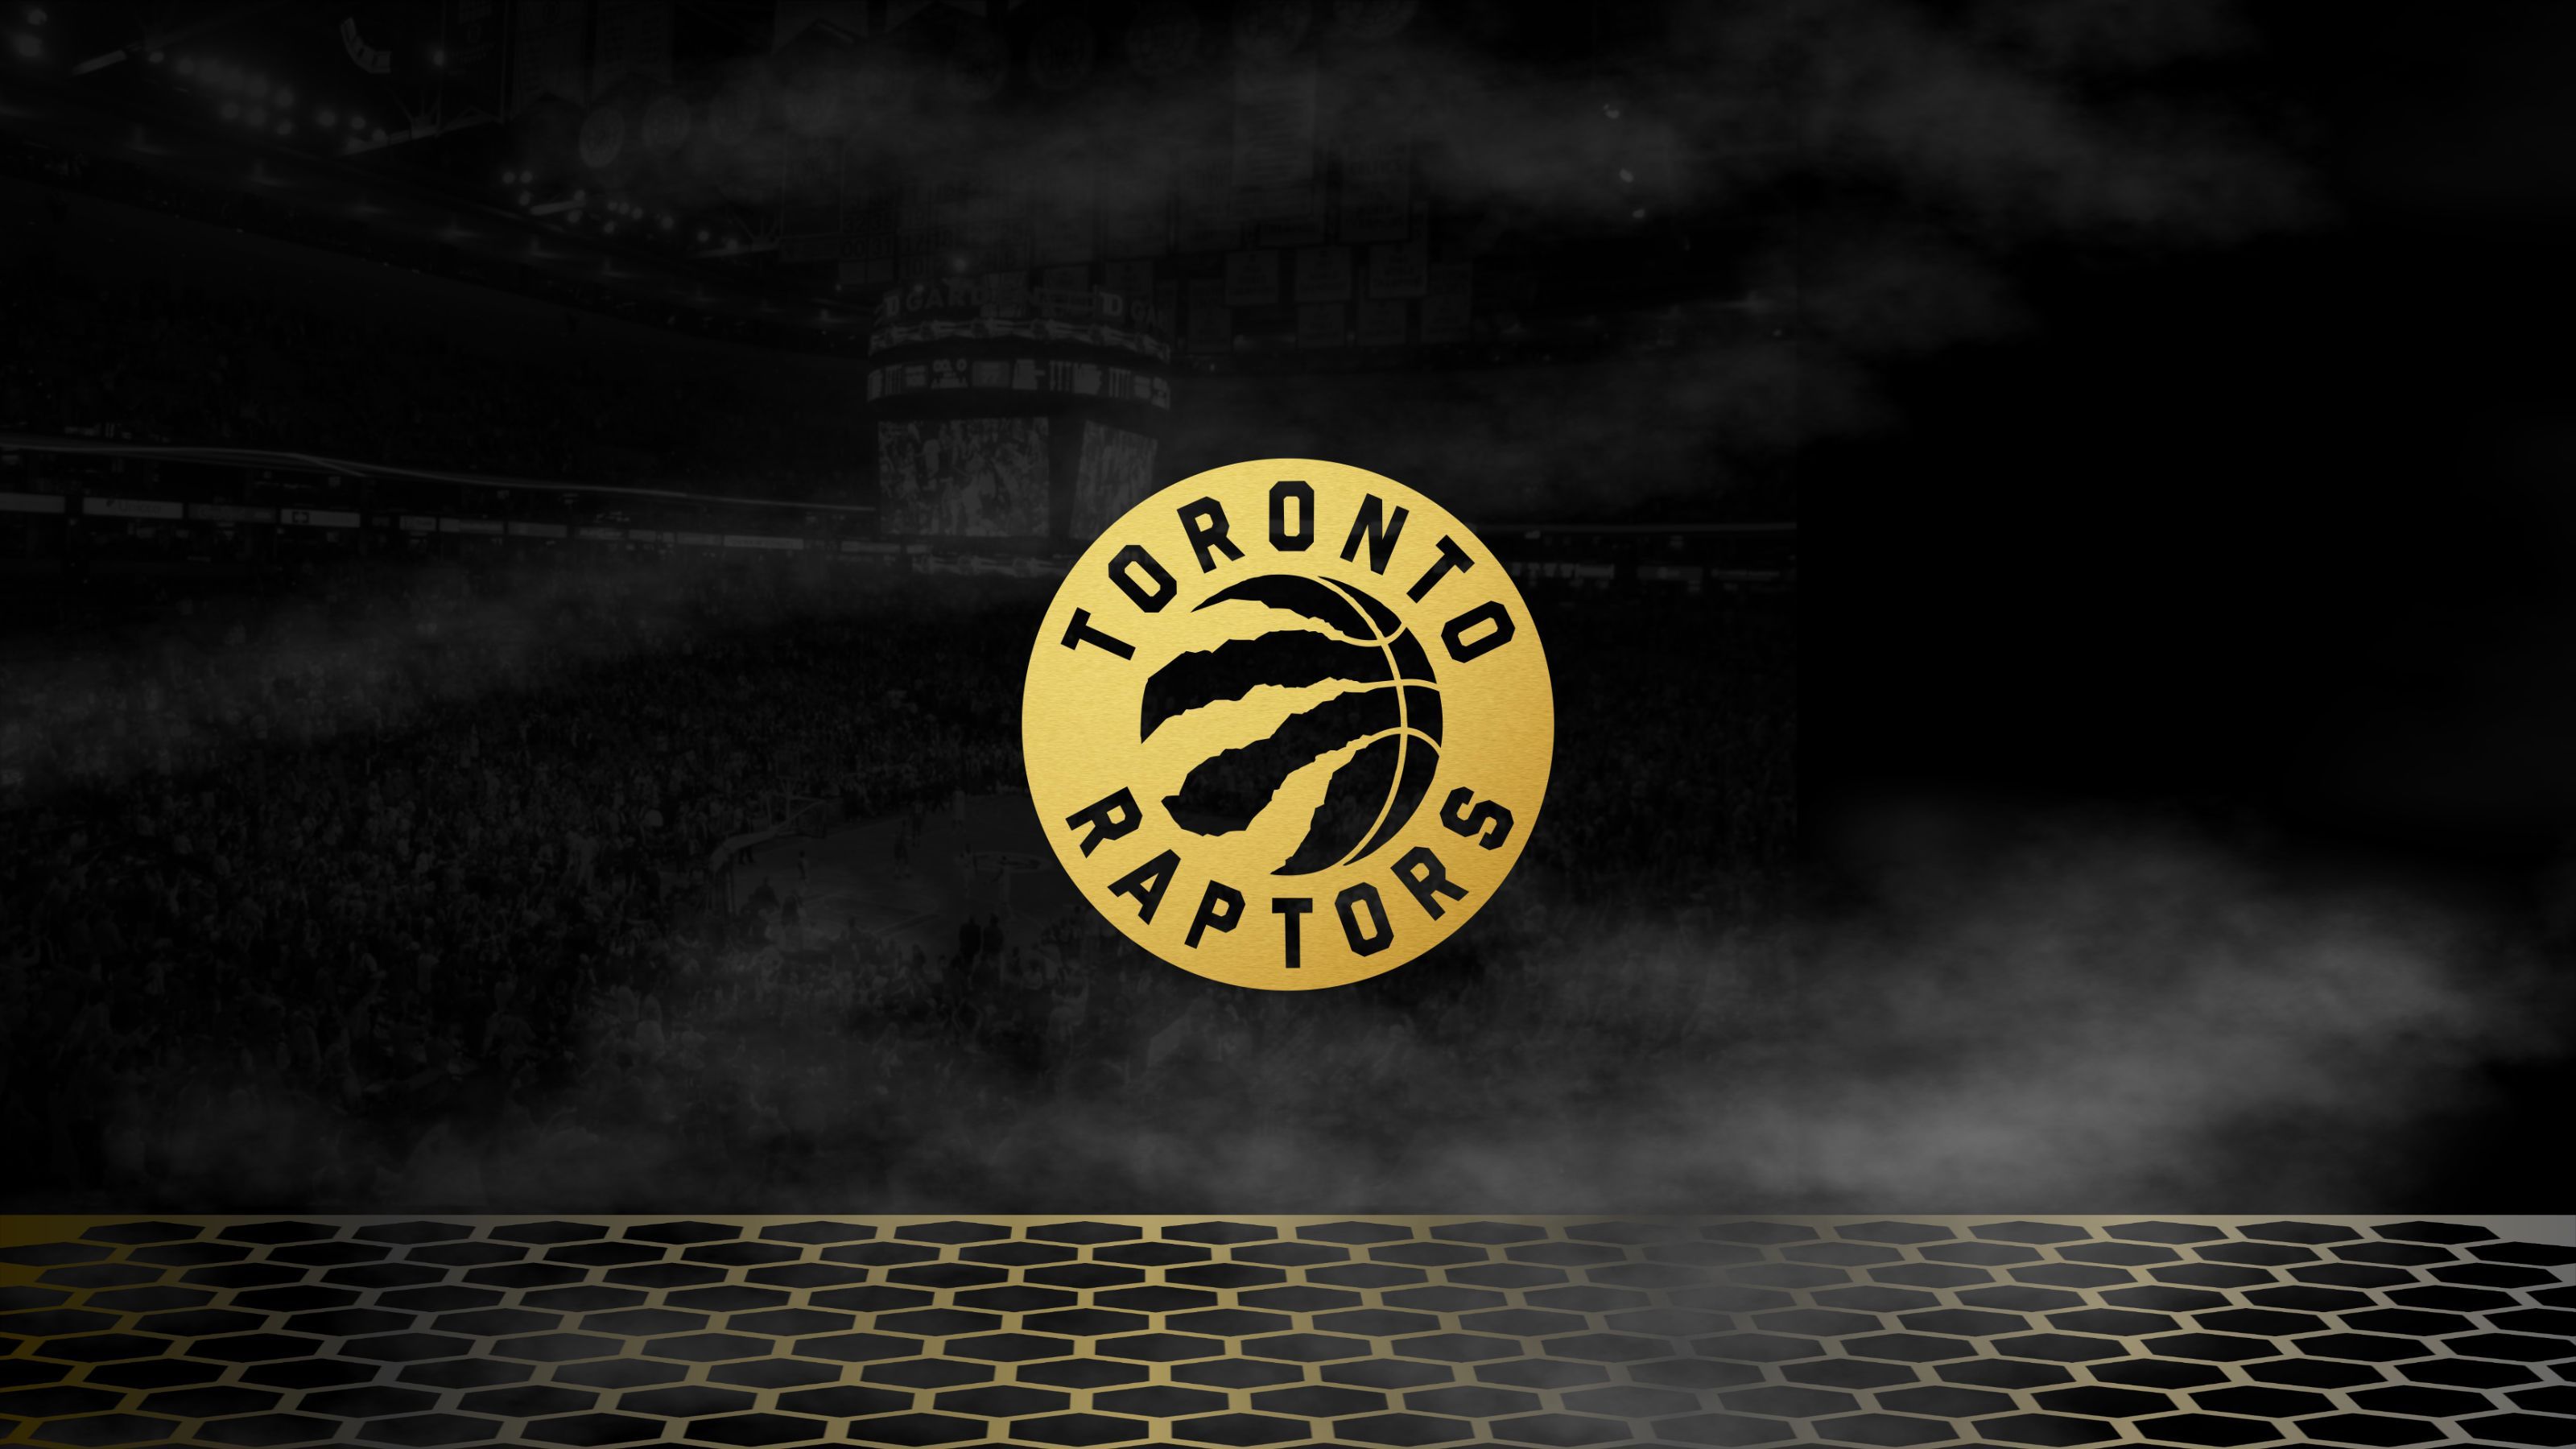 Toronto Raptors Background Wallpaper. Nba wallpaper, Nba background, Basketball wallpaper